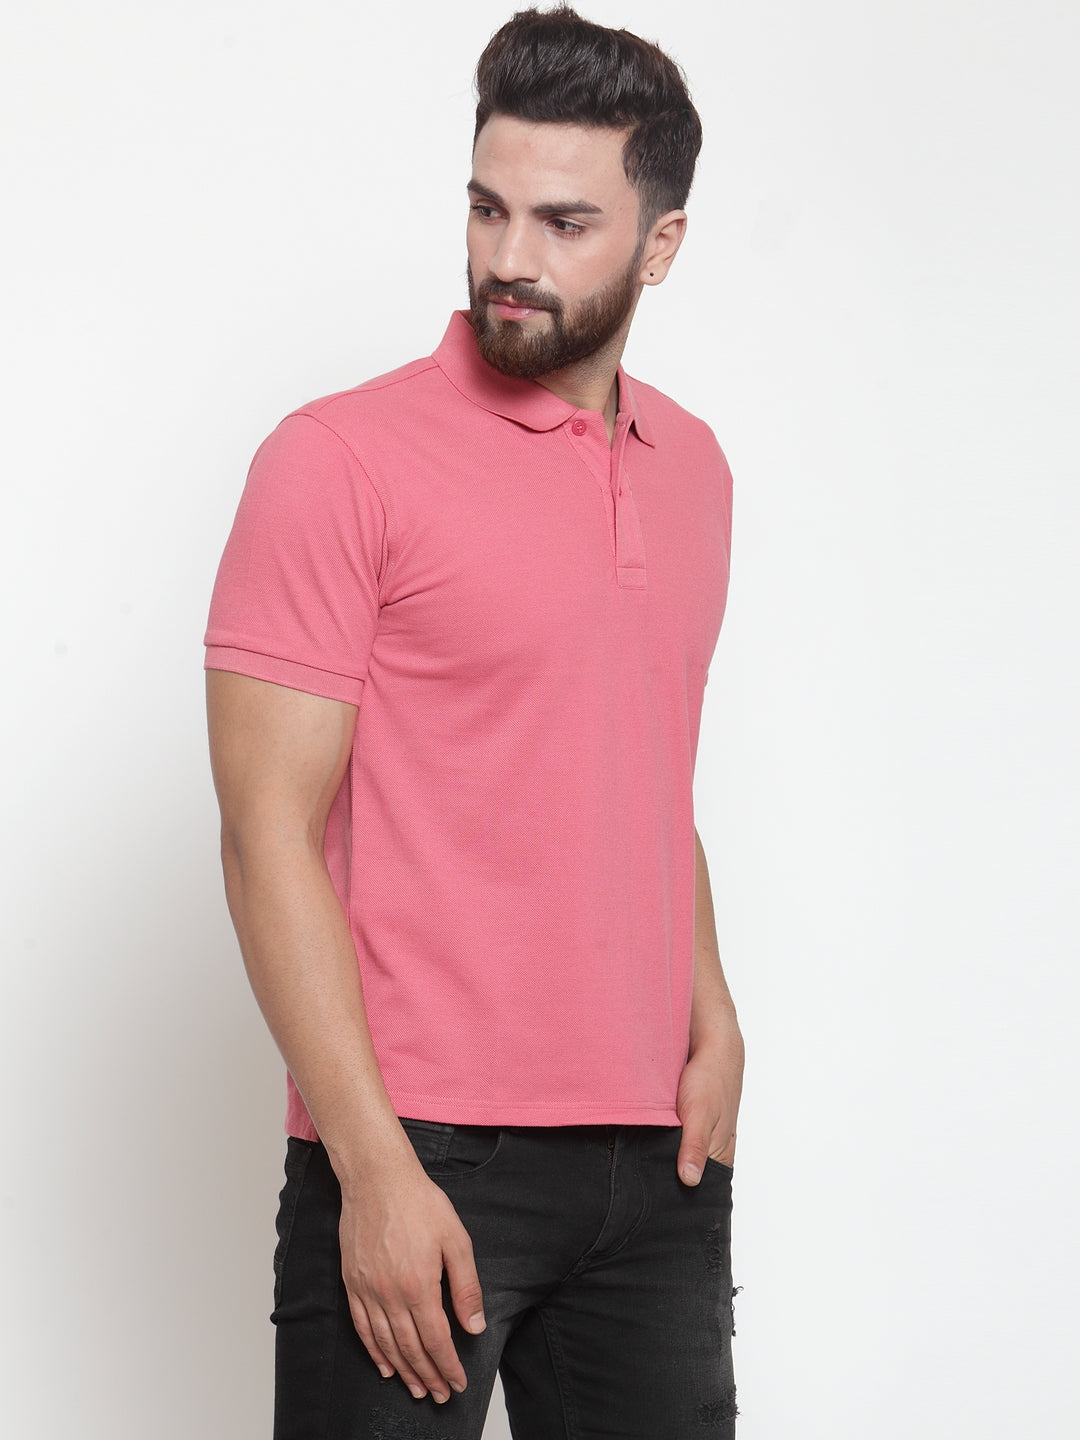 Men's Hot Pink Polo T-Shirt